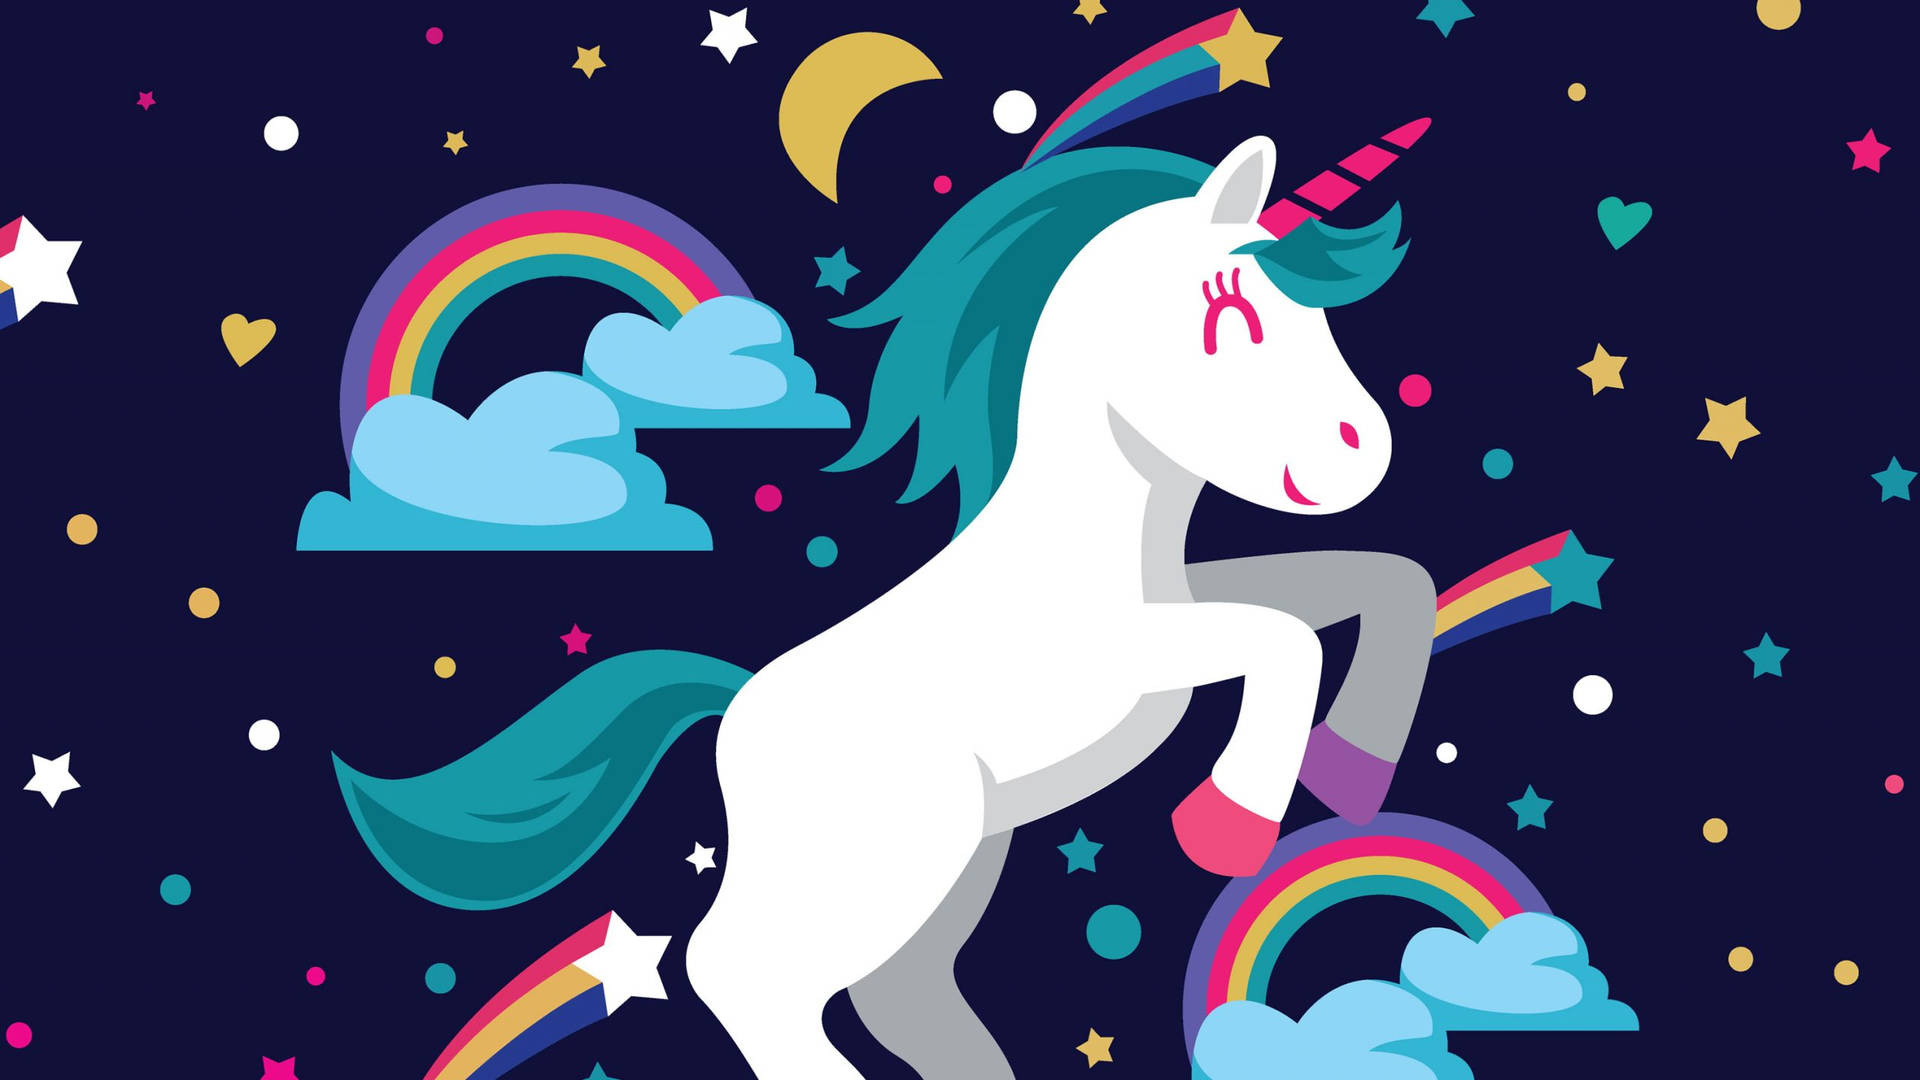 Free Cool Unicorn Wallpaper Downloads, Cool Unicorn Wallpaper for FREE